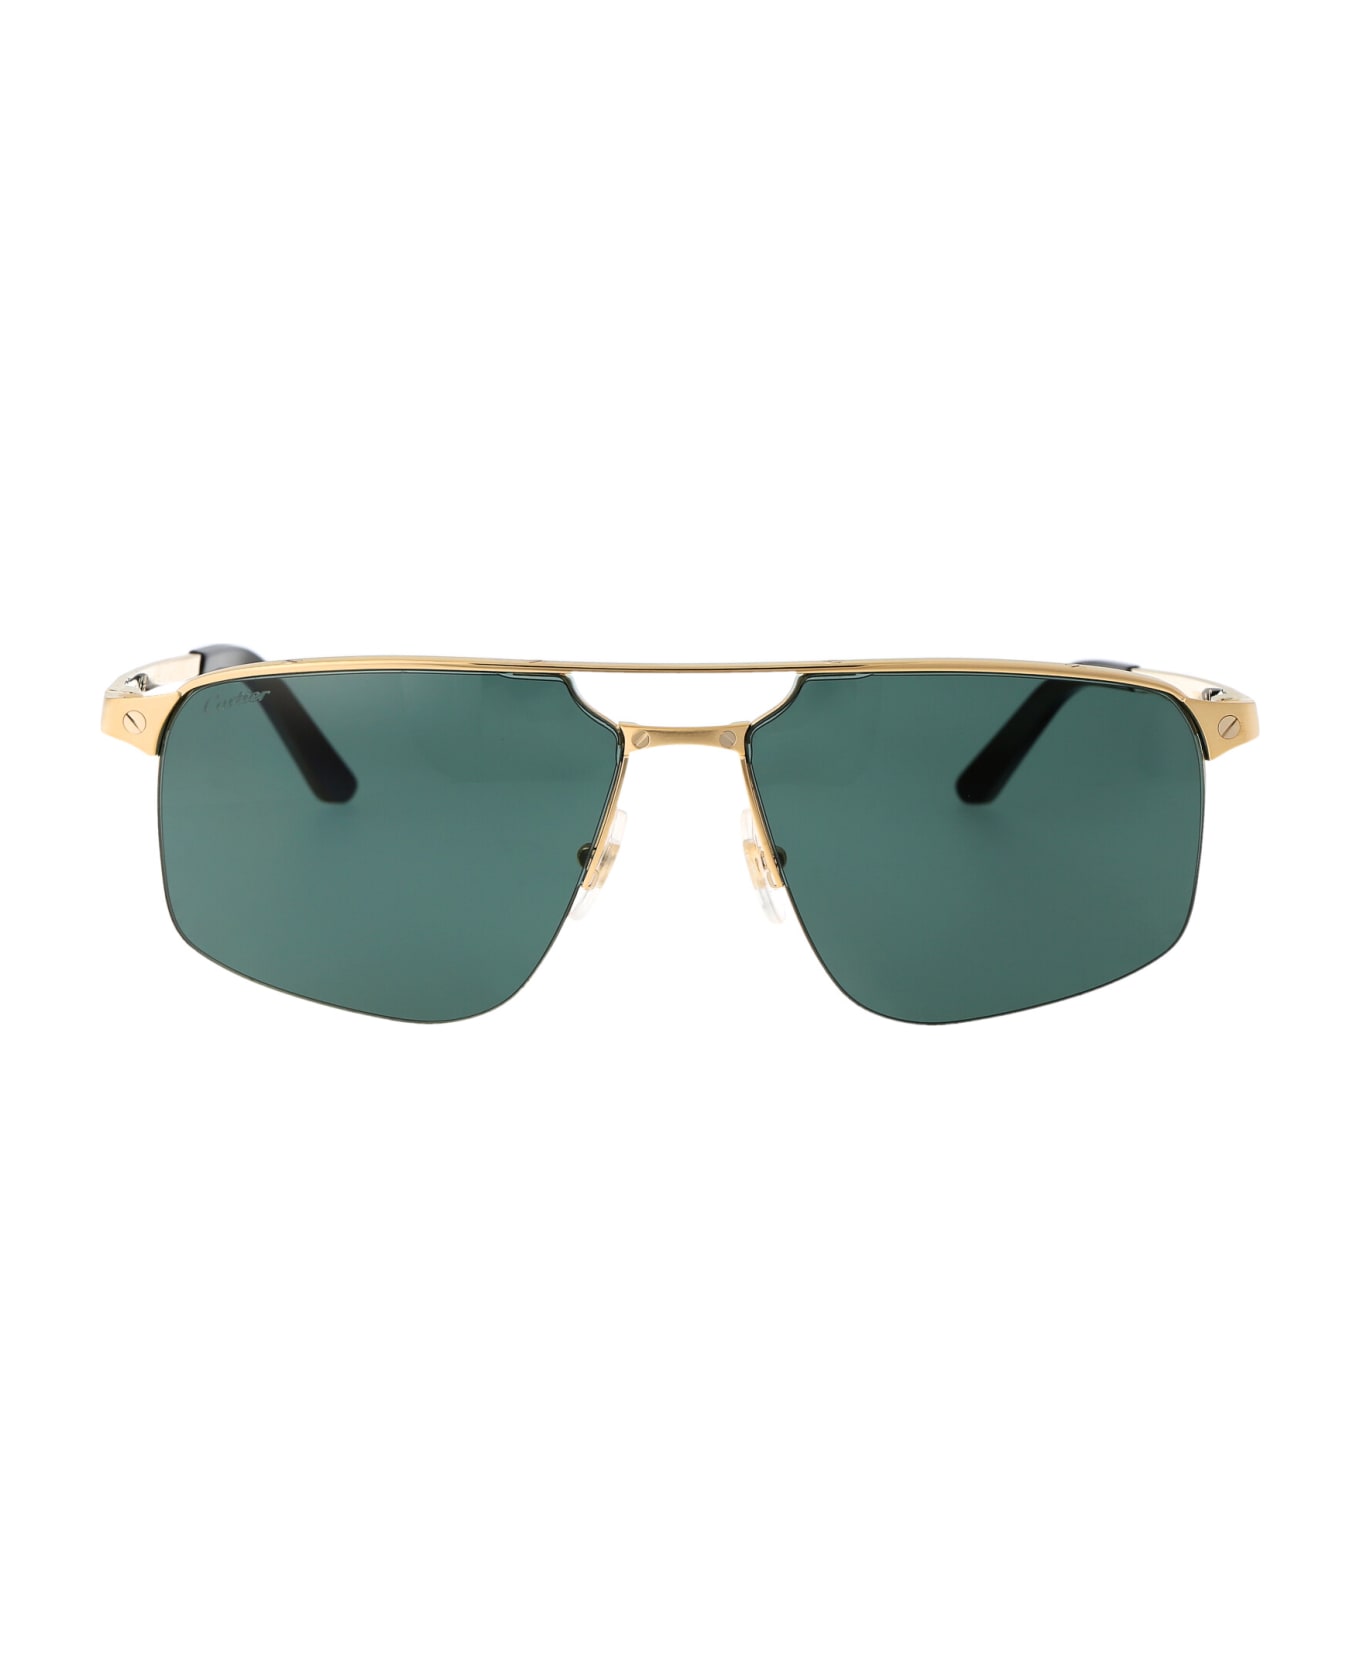 Cartier Eyewear Ct0385s Sunglasses - 002 GOLD GOLD GREEN サングラス